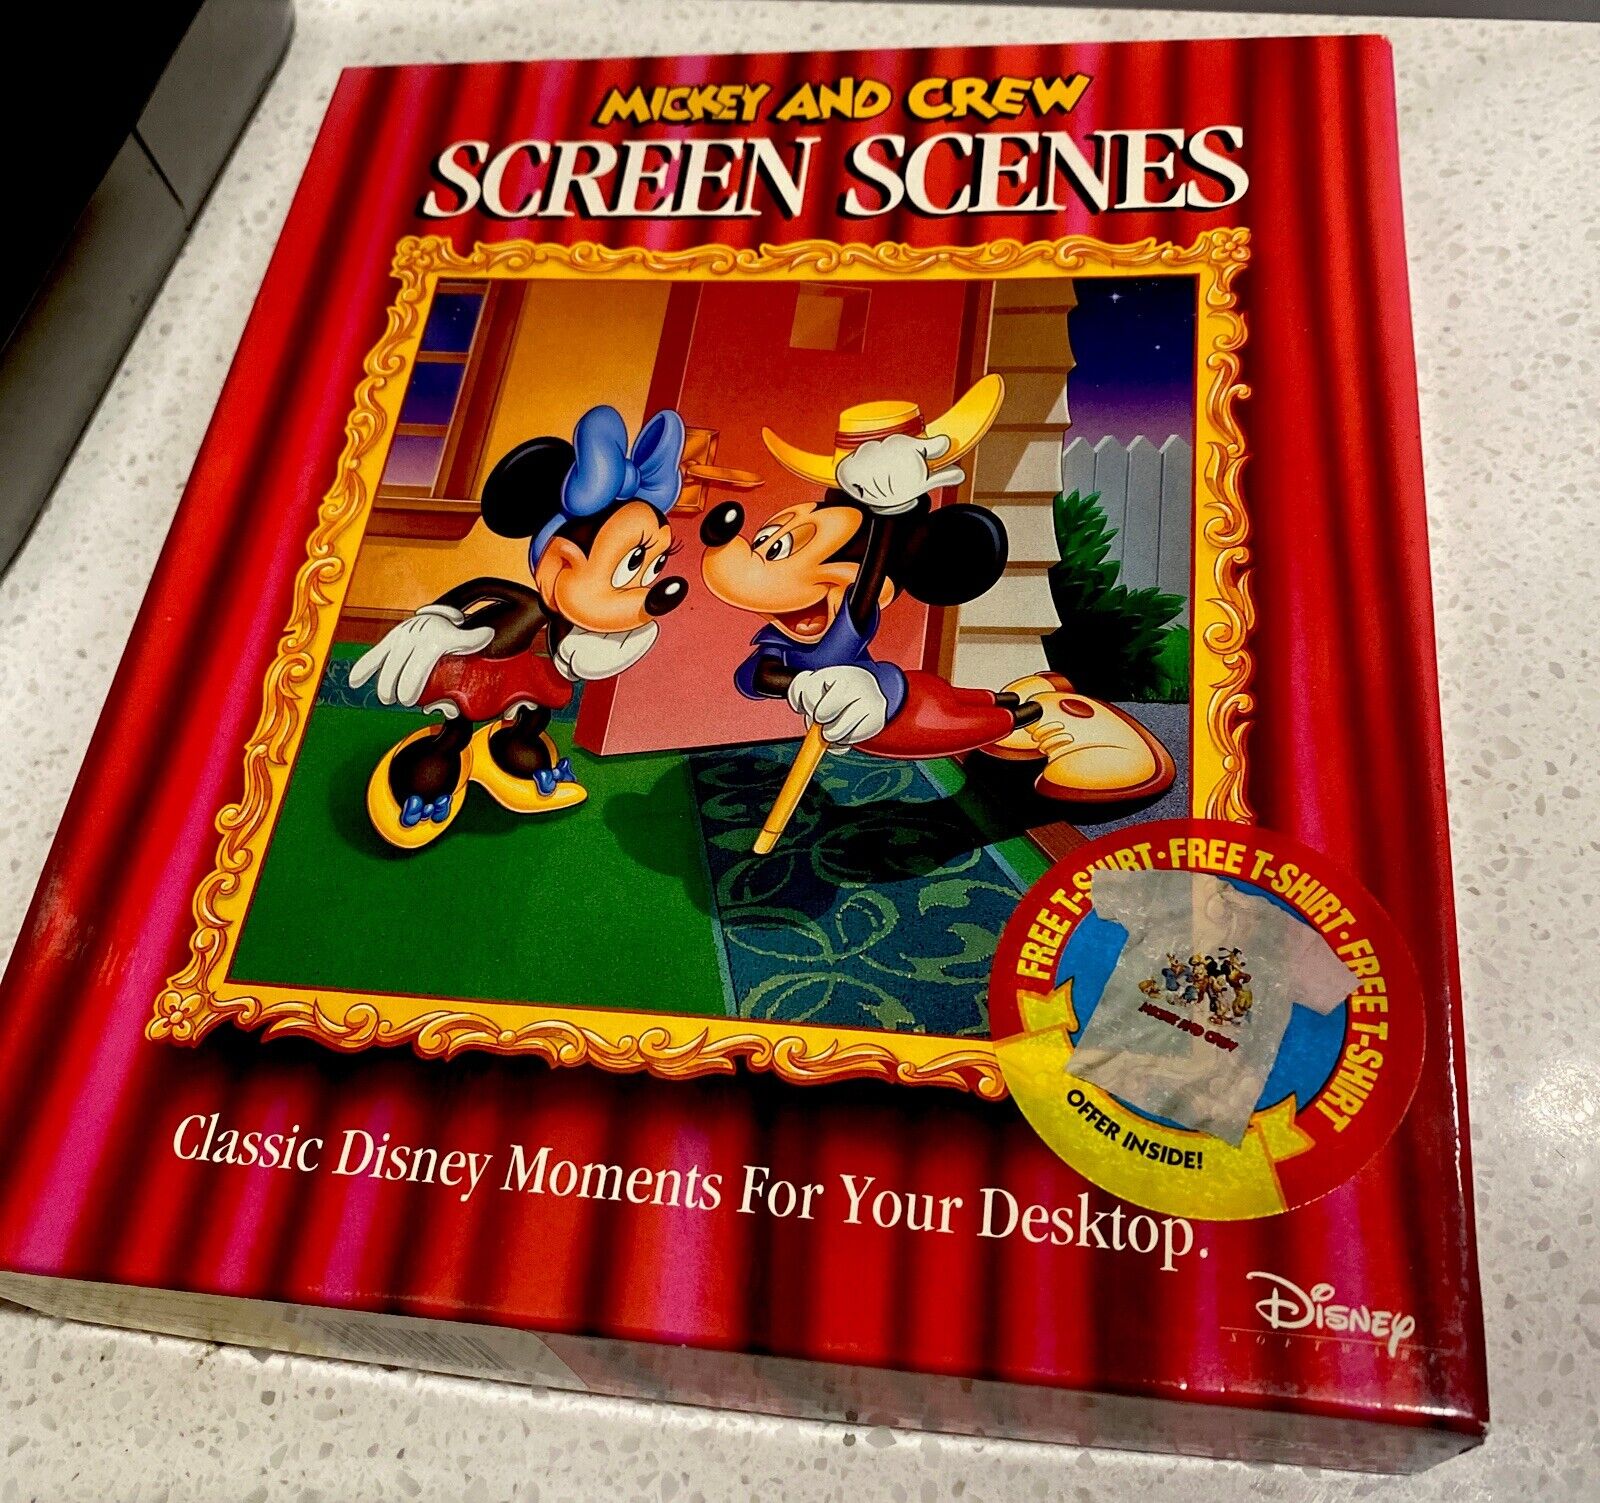 Disney's Mickey and Crew Screen Scenes CD-ROM, Windows 95, PC Big Box Vintage